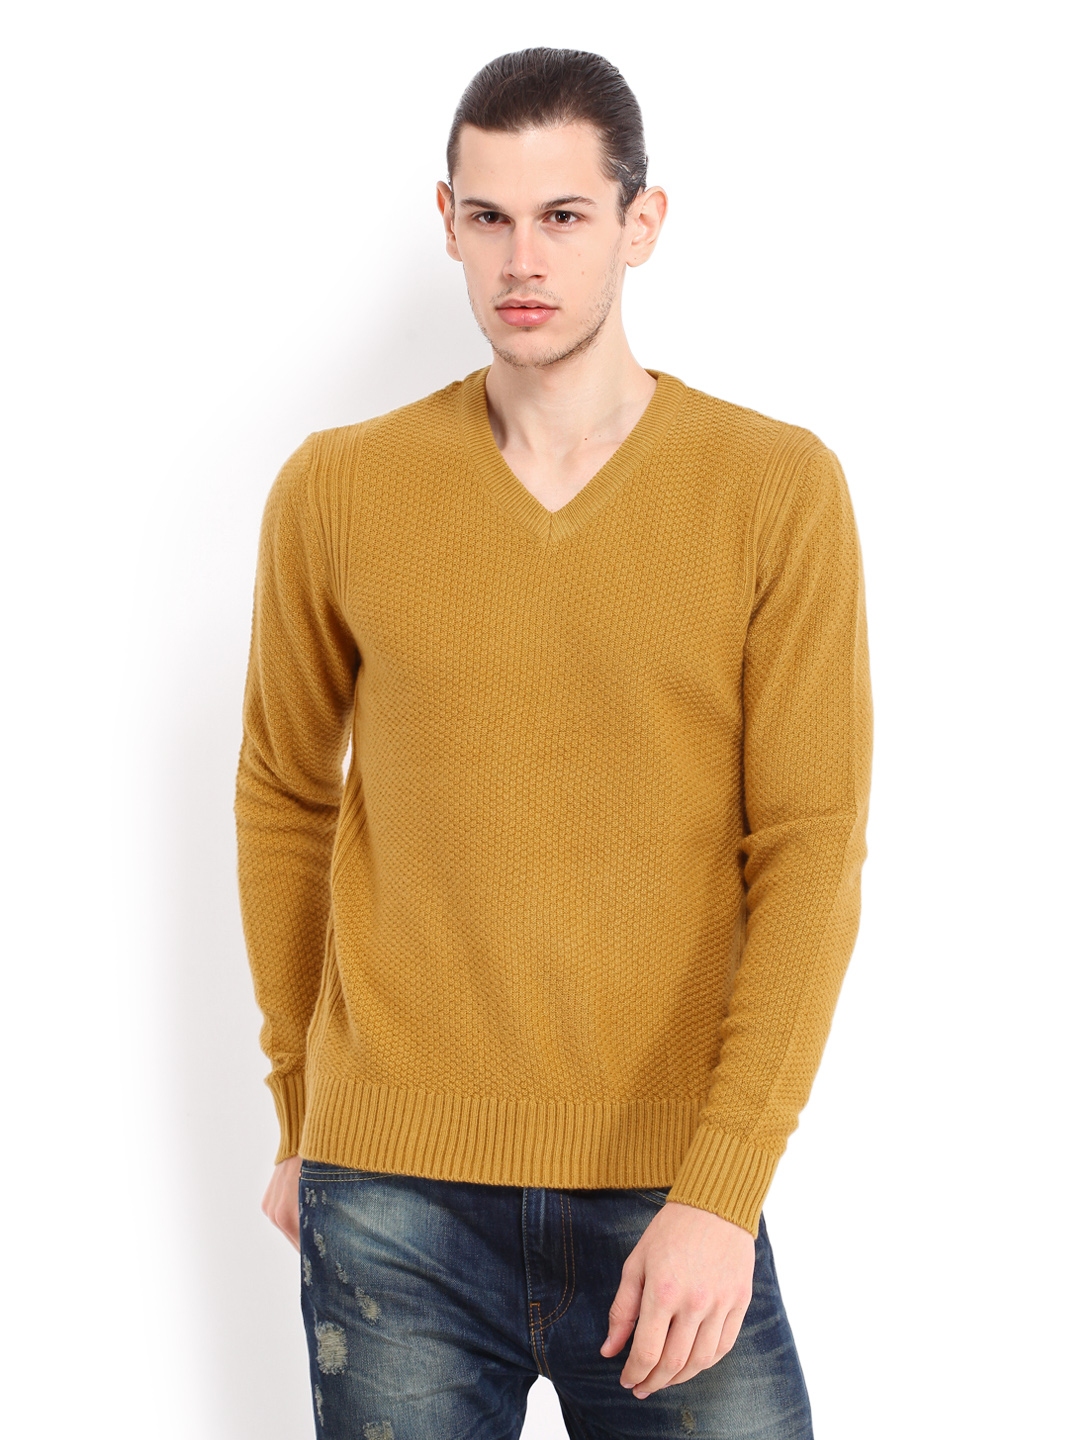 mustard yellow long cardigan sweater men